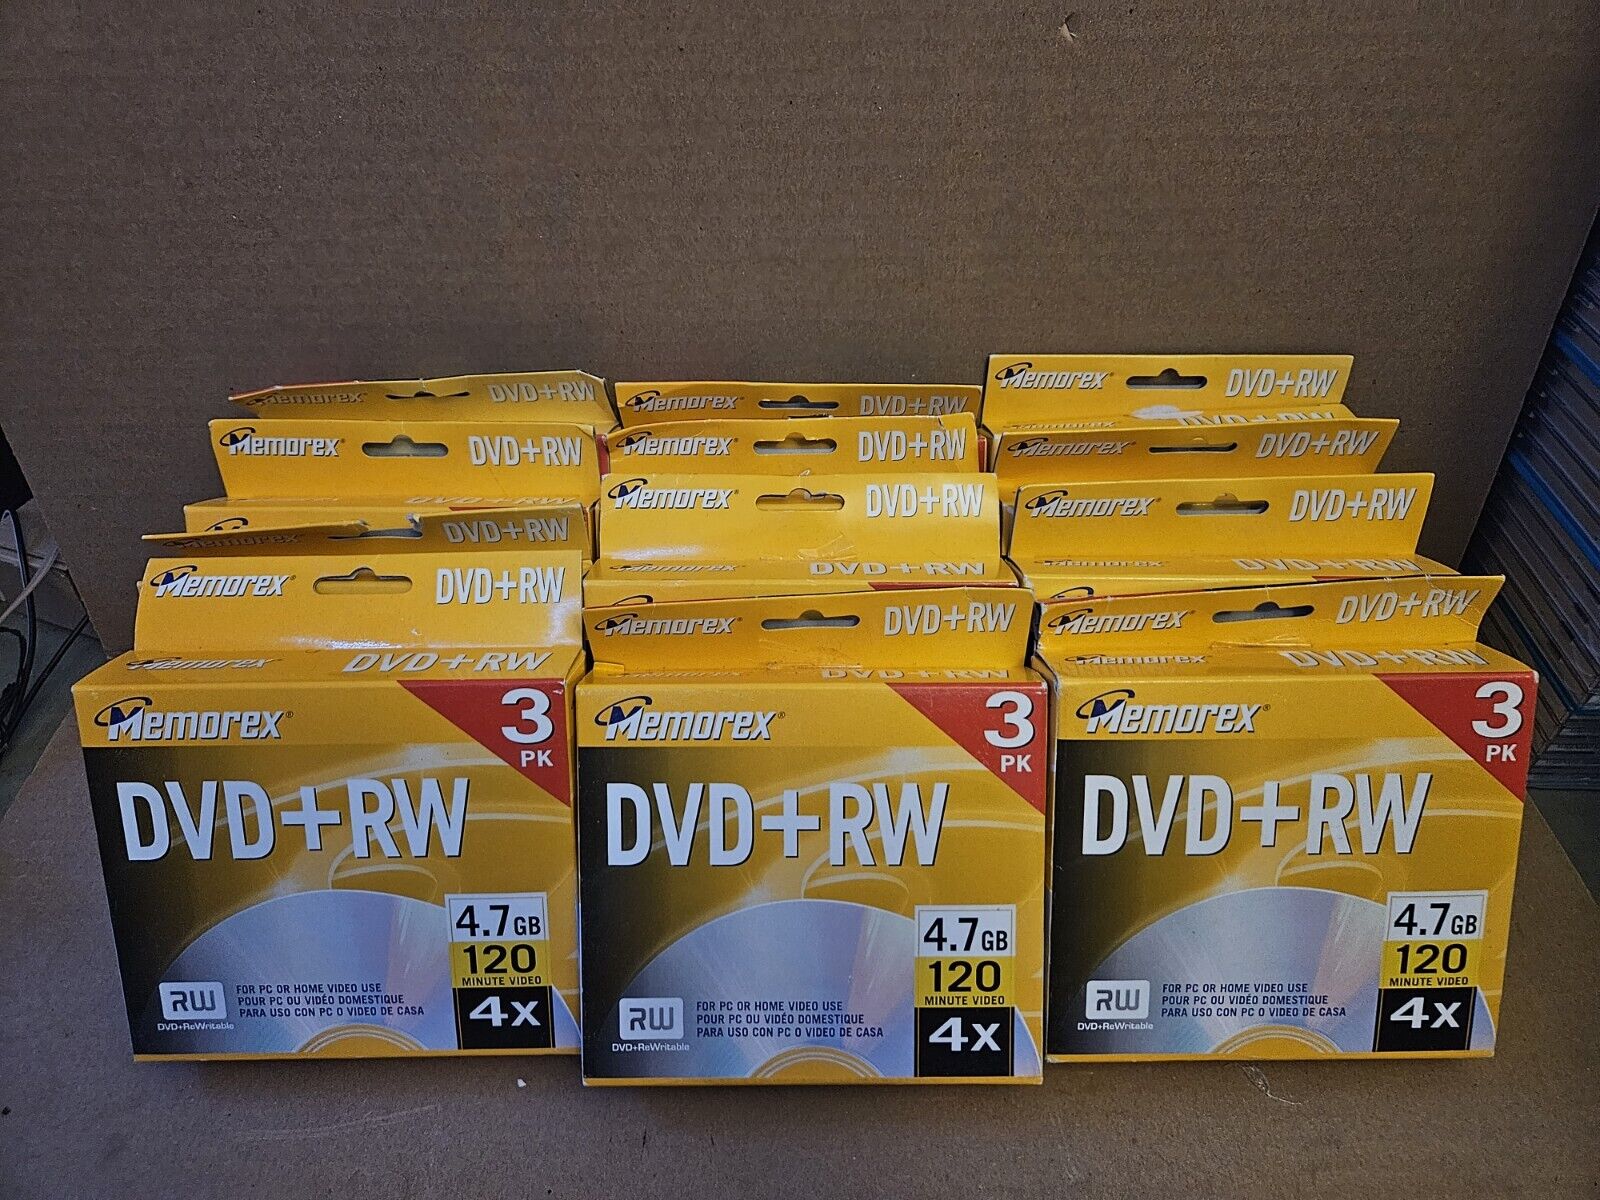 NEW Lot Of 36 Maxell DVD-RW DVD Rewritable DVD Discs 4.7GB 4X 120 Min